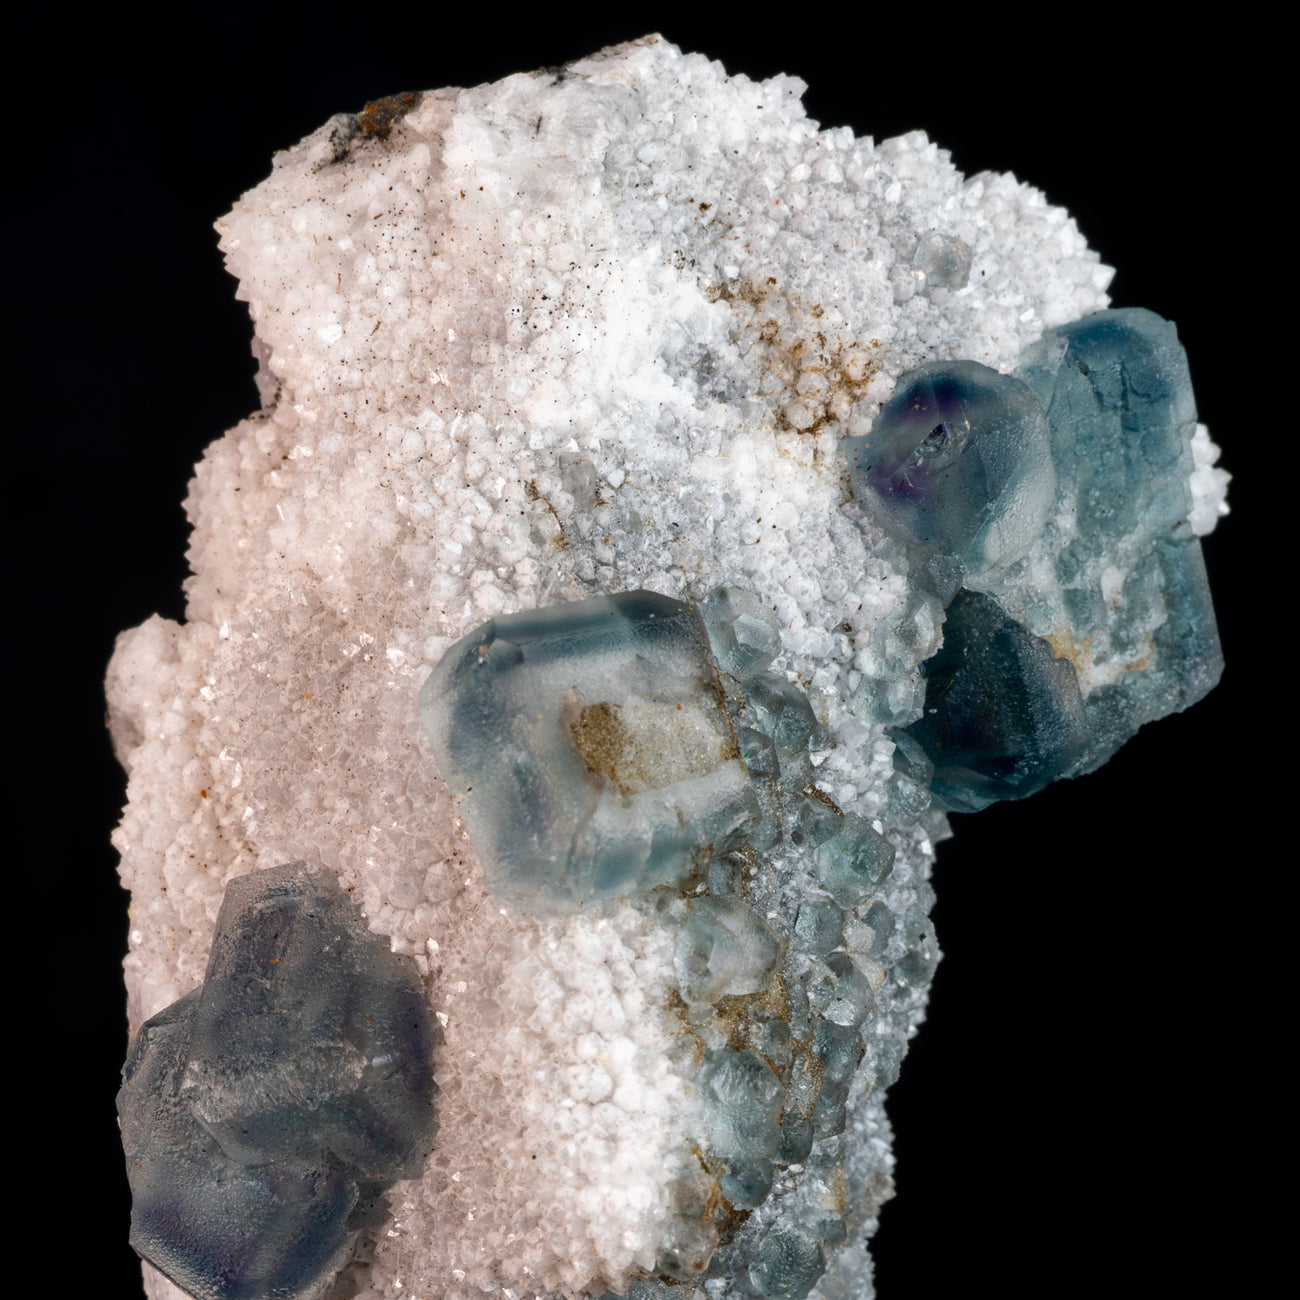 Stunning contrast of Aqua Blue Fluorite against its druzy matrix backdrop.